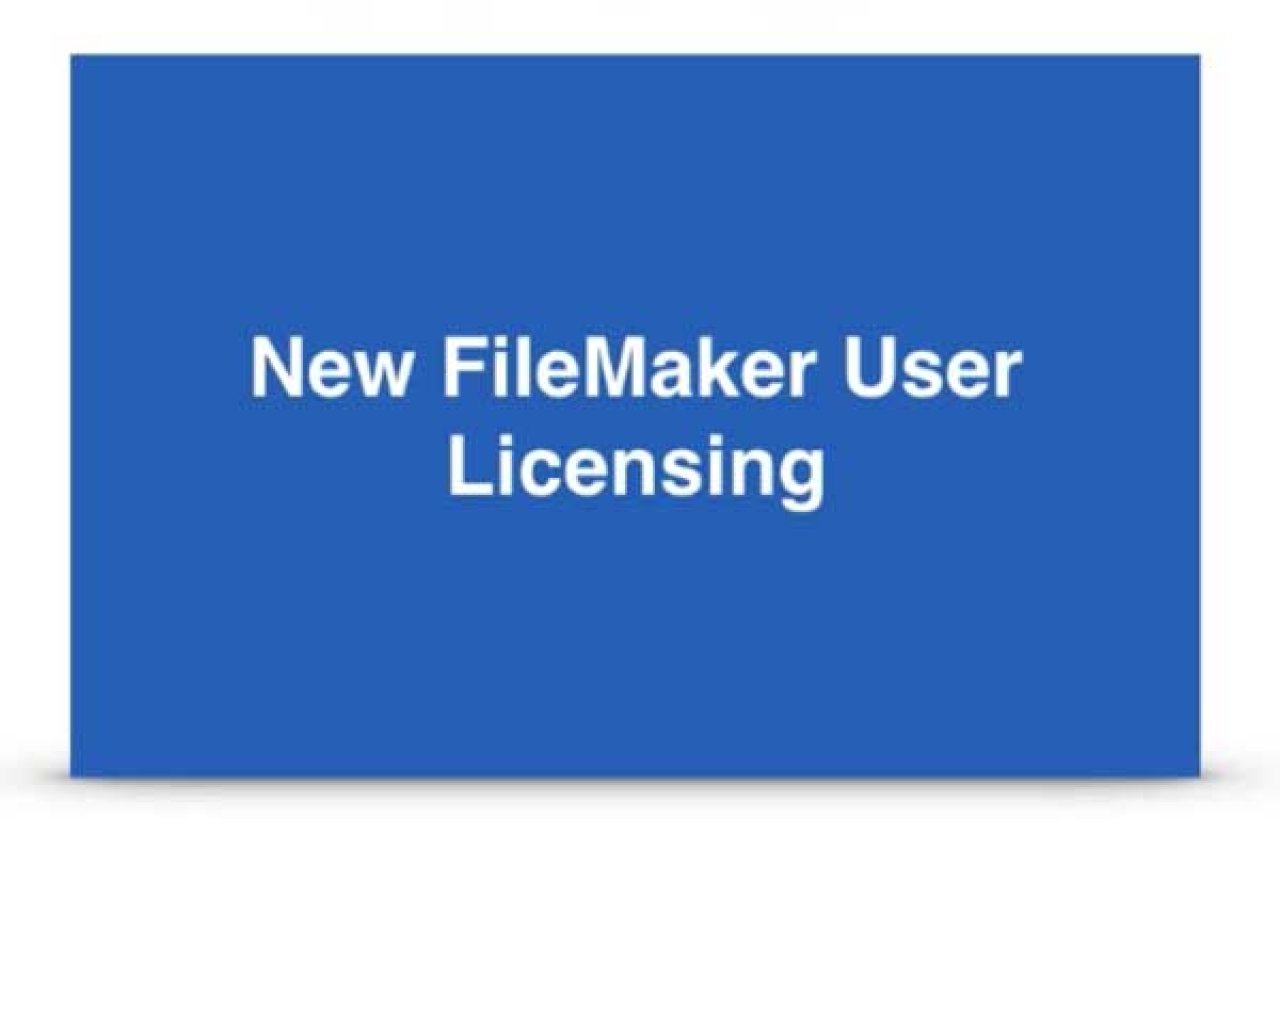 filemaker user licensing.